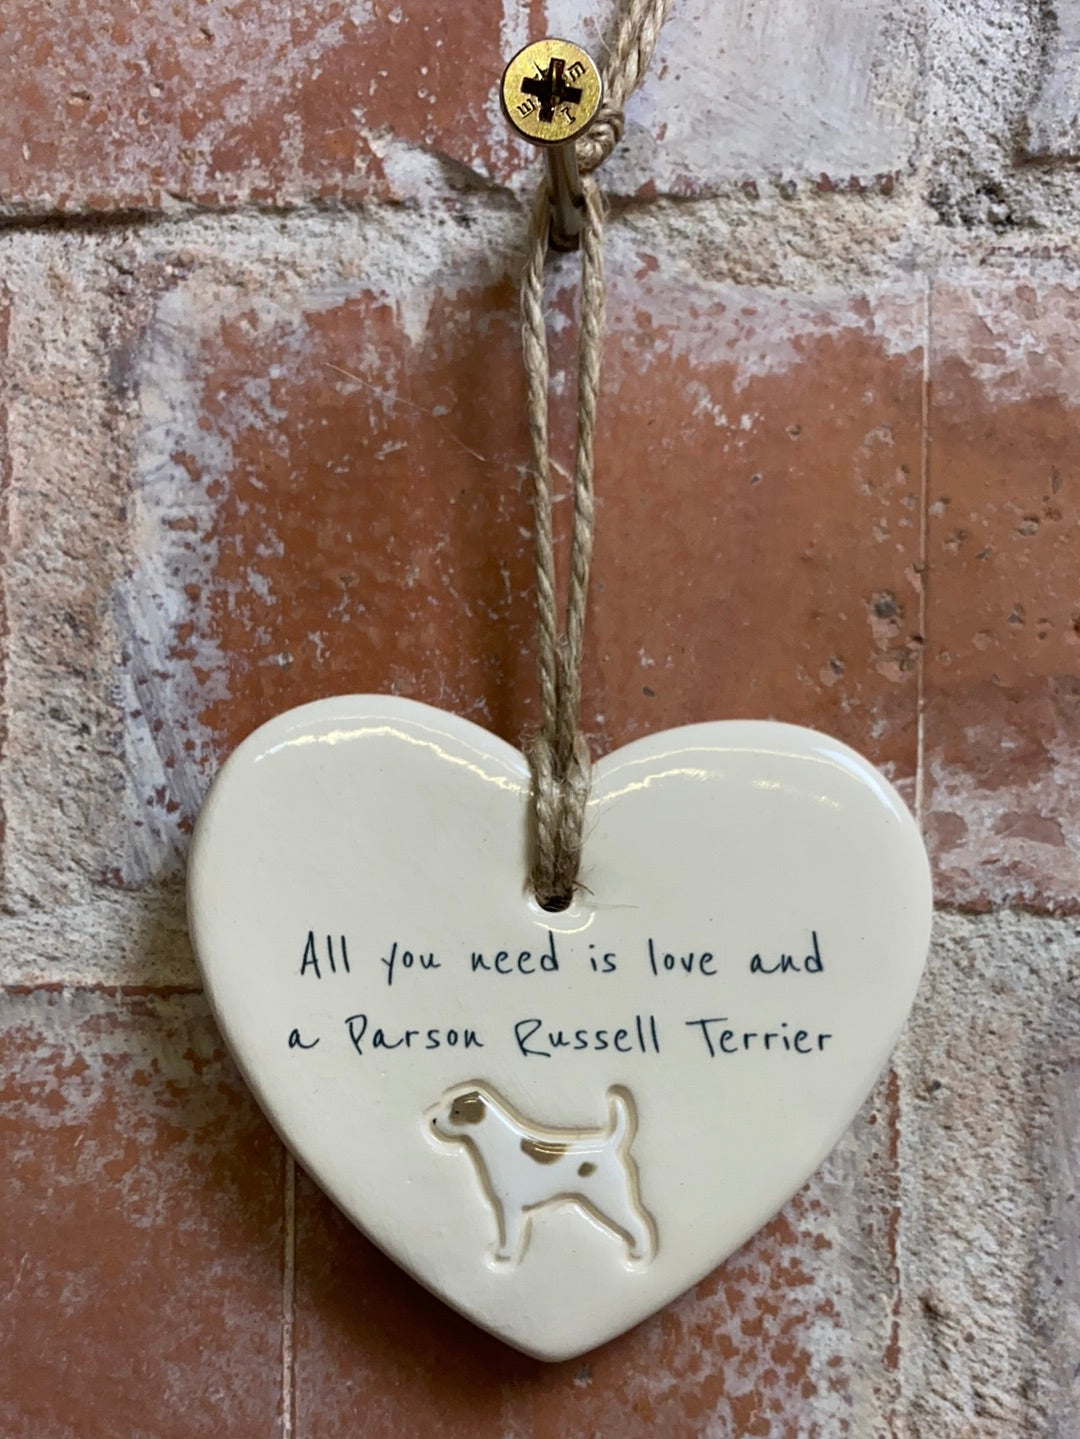 Parson Russell Terrier ceramic heart